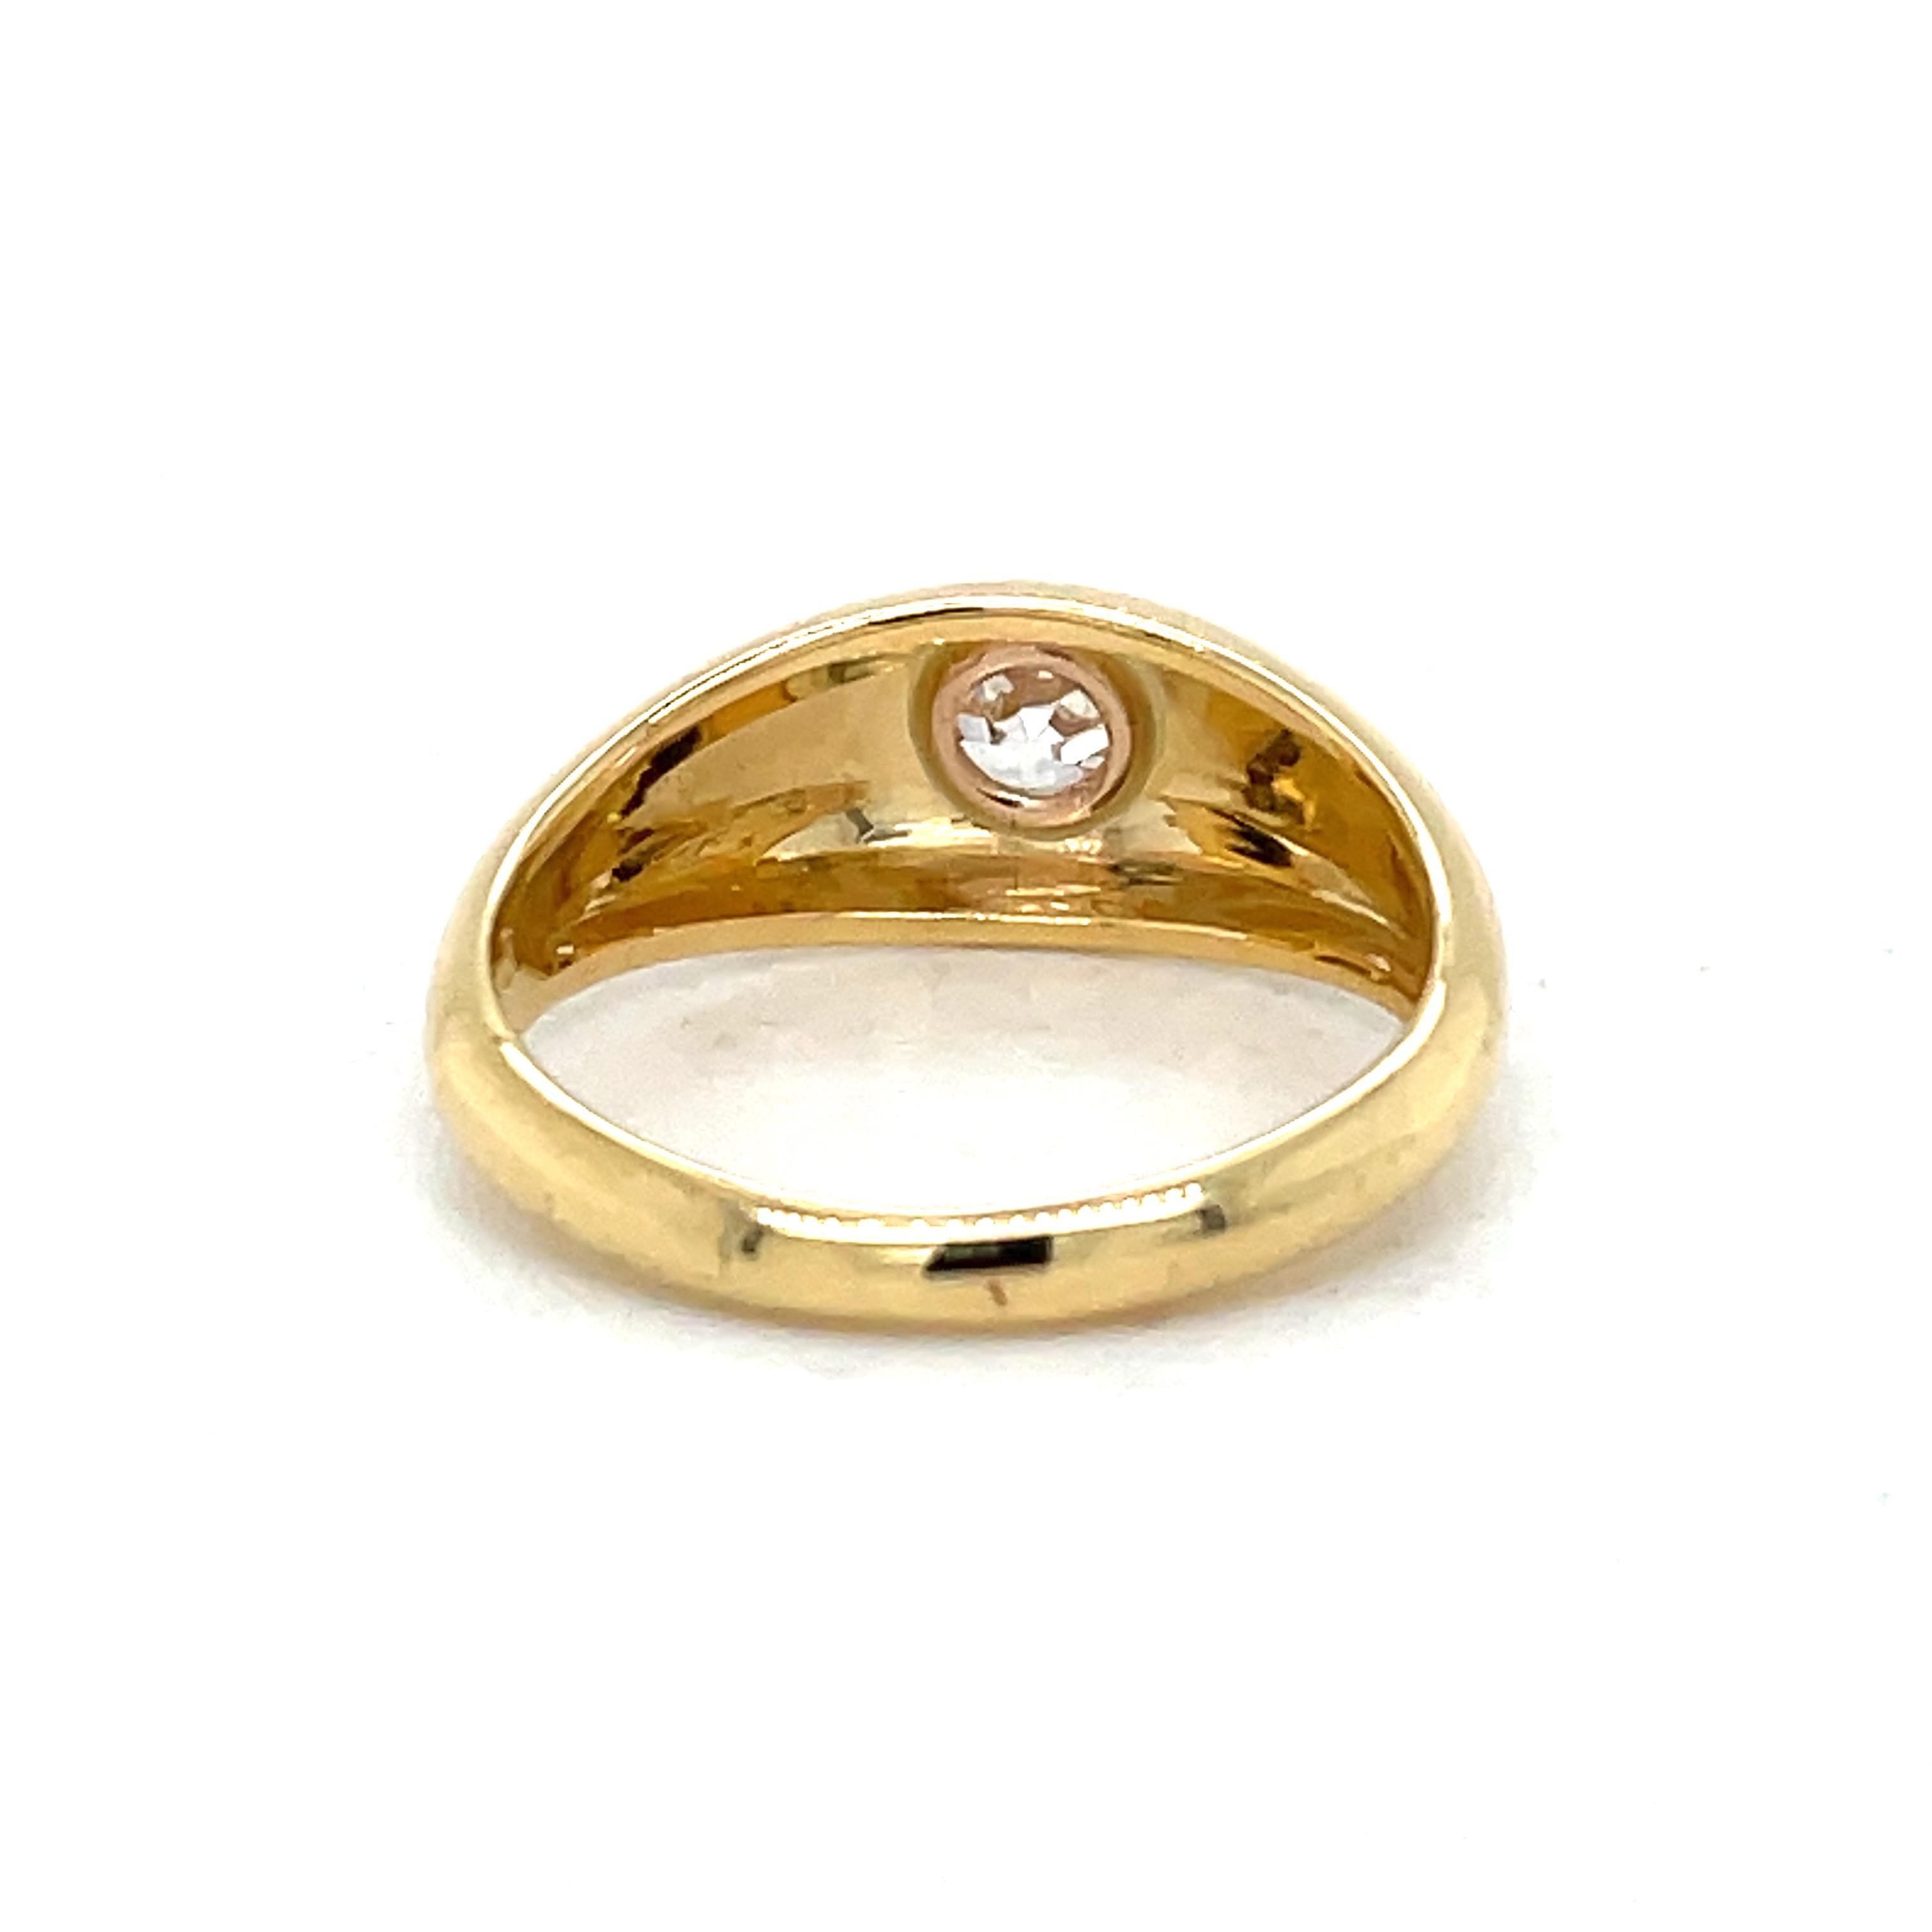 For Sale:  Dome Gold ring, Bezel set, 0.3CT Old Mine Diamond, 18k Gold, vintage stayle ring 6